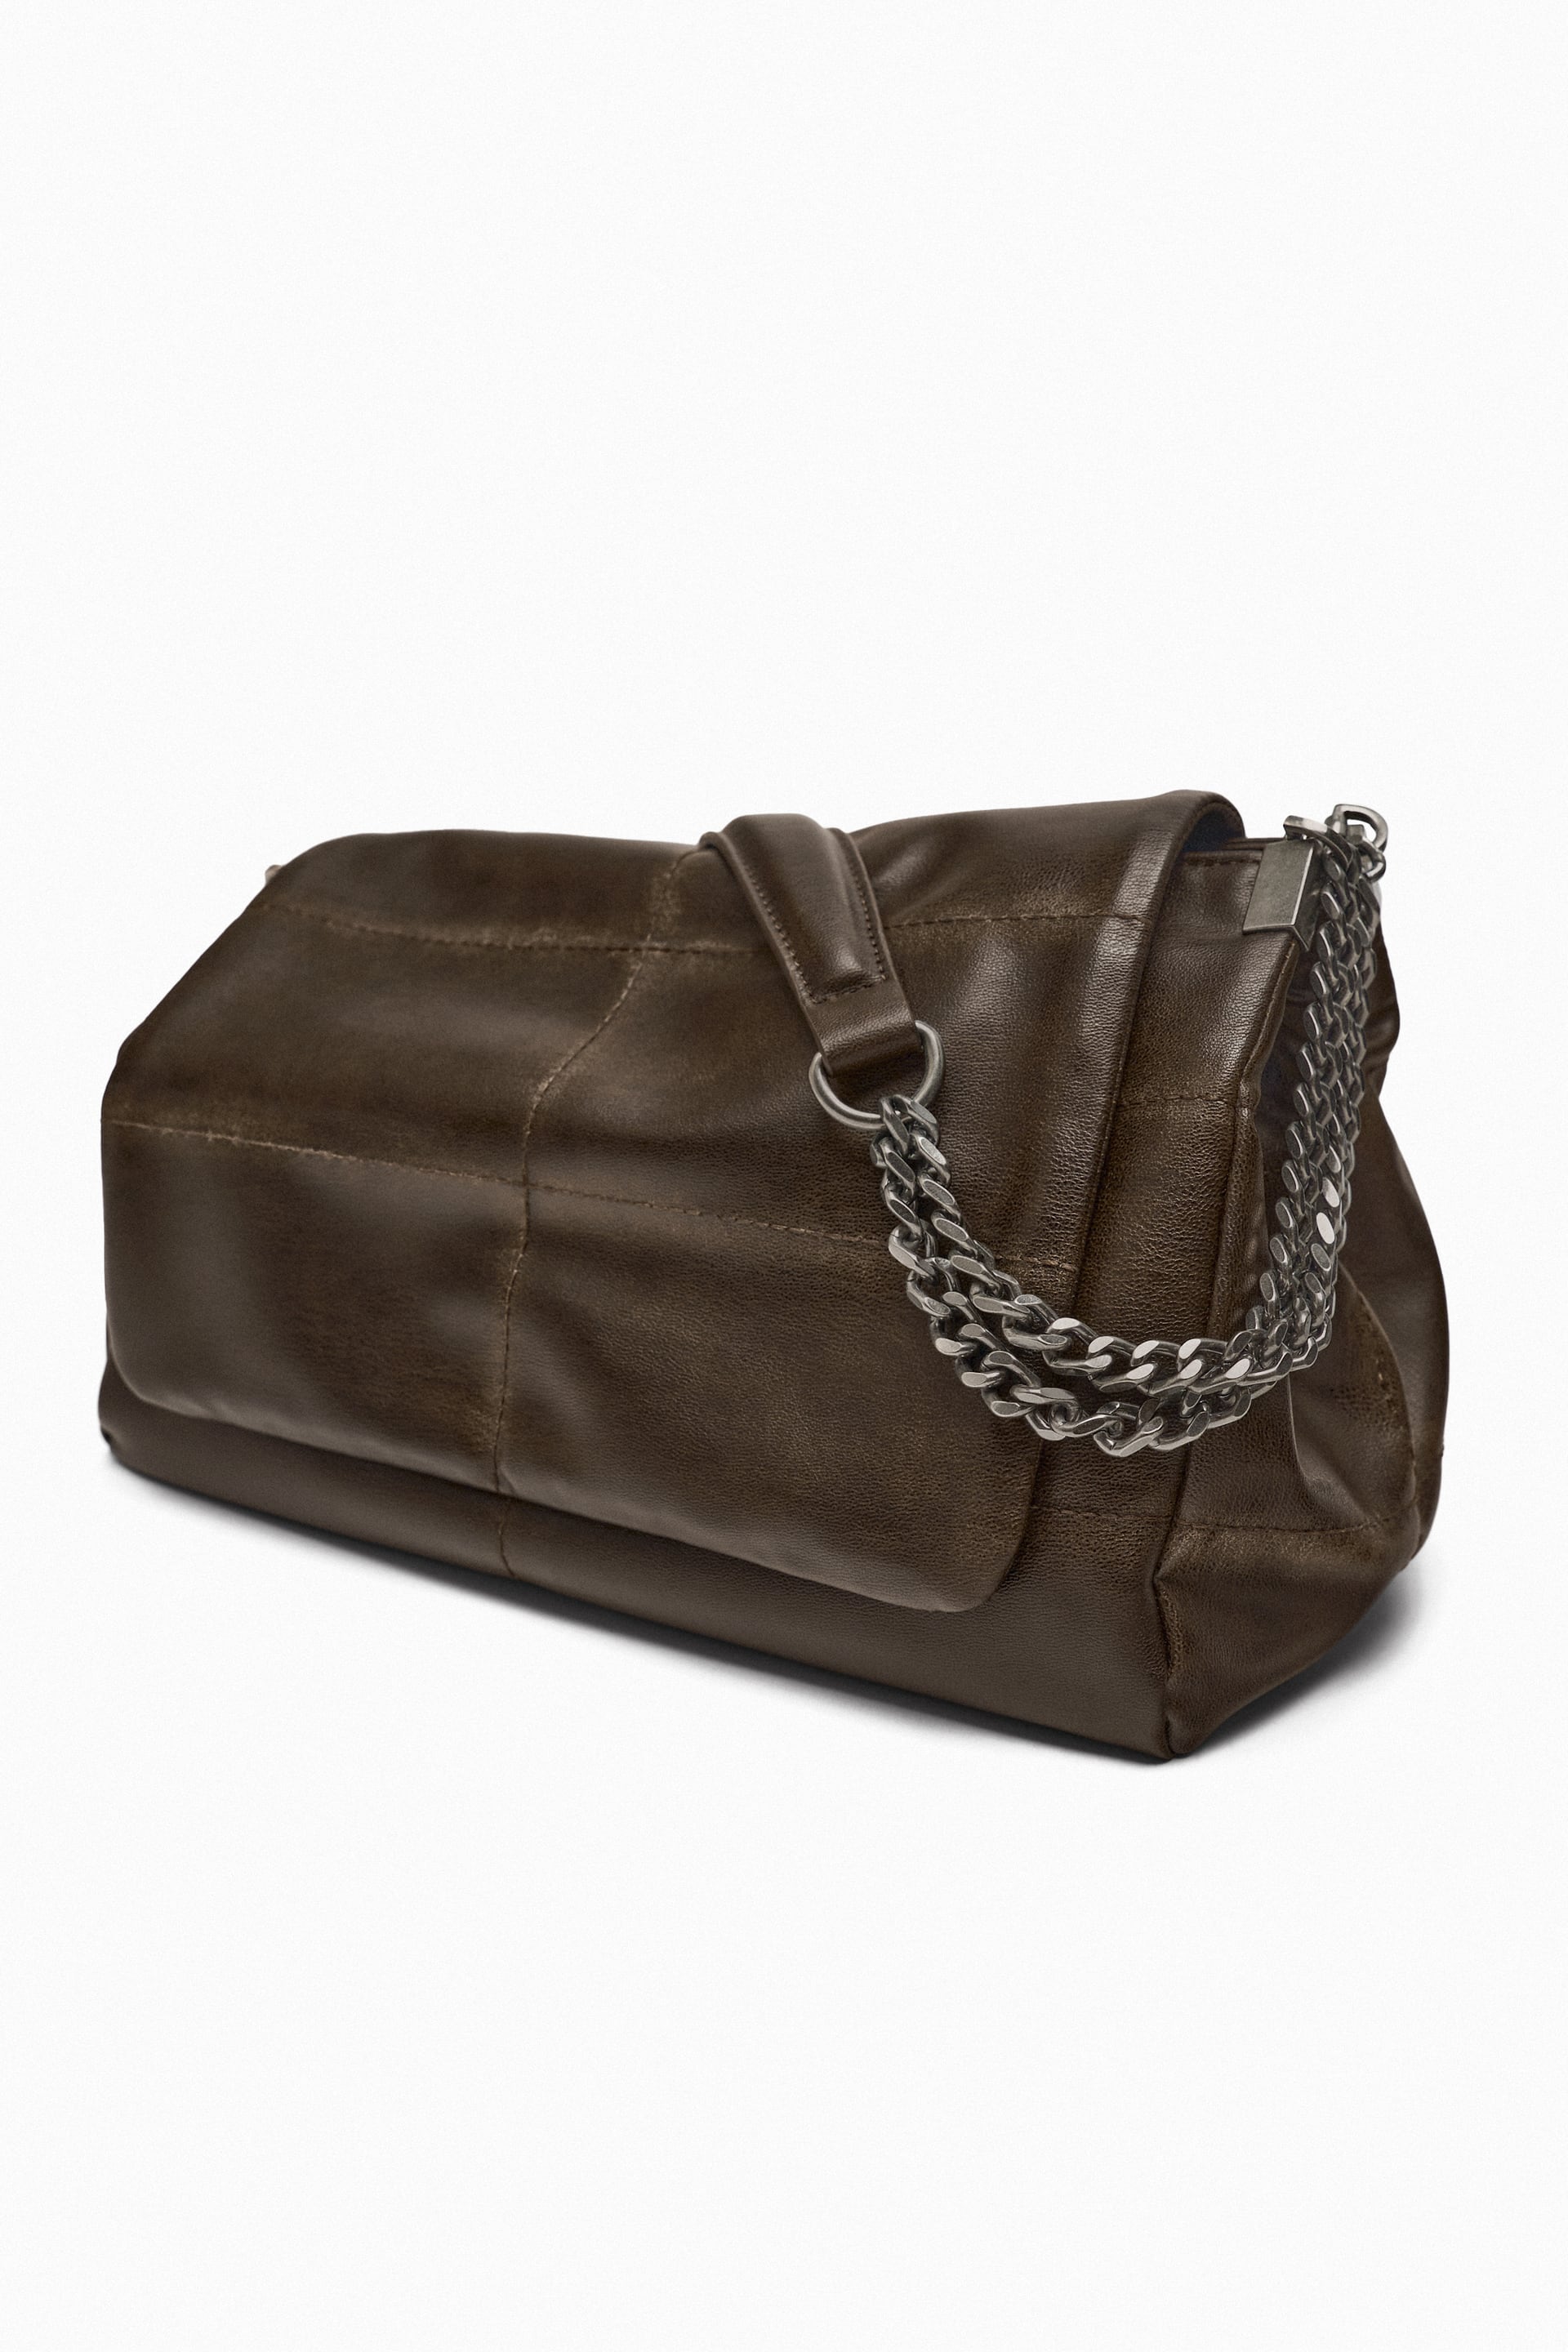 Zara - Rock Style Flap Shoulder Bag - Brown - Women